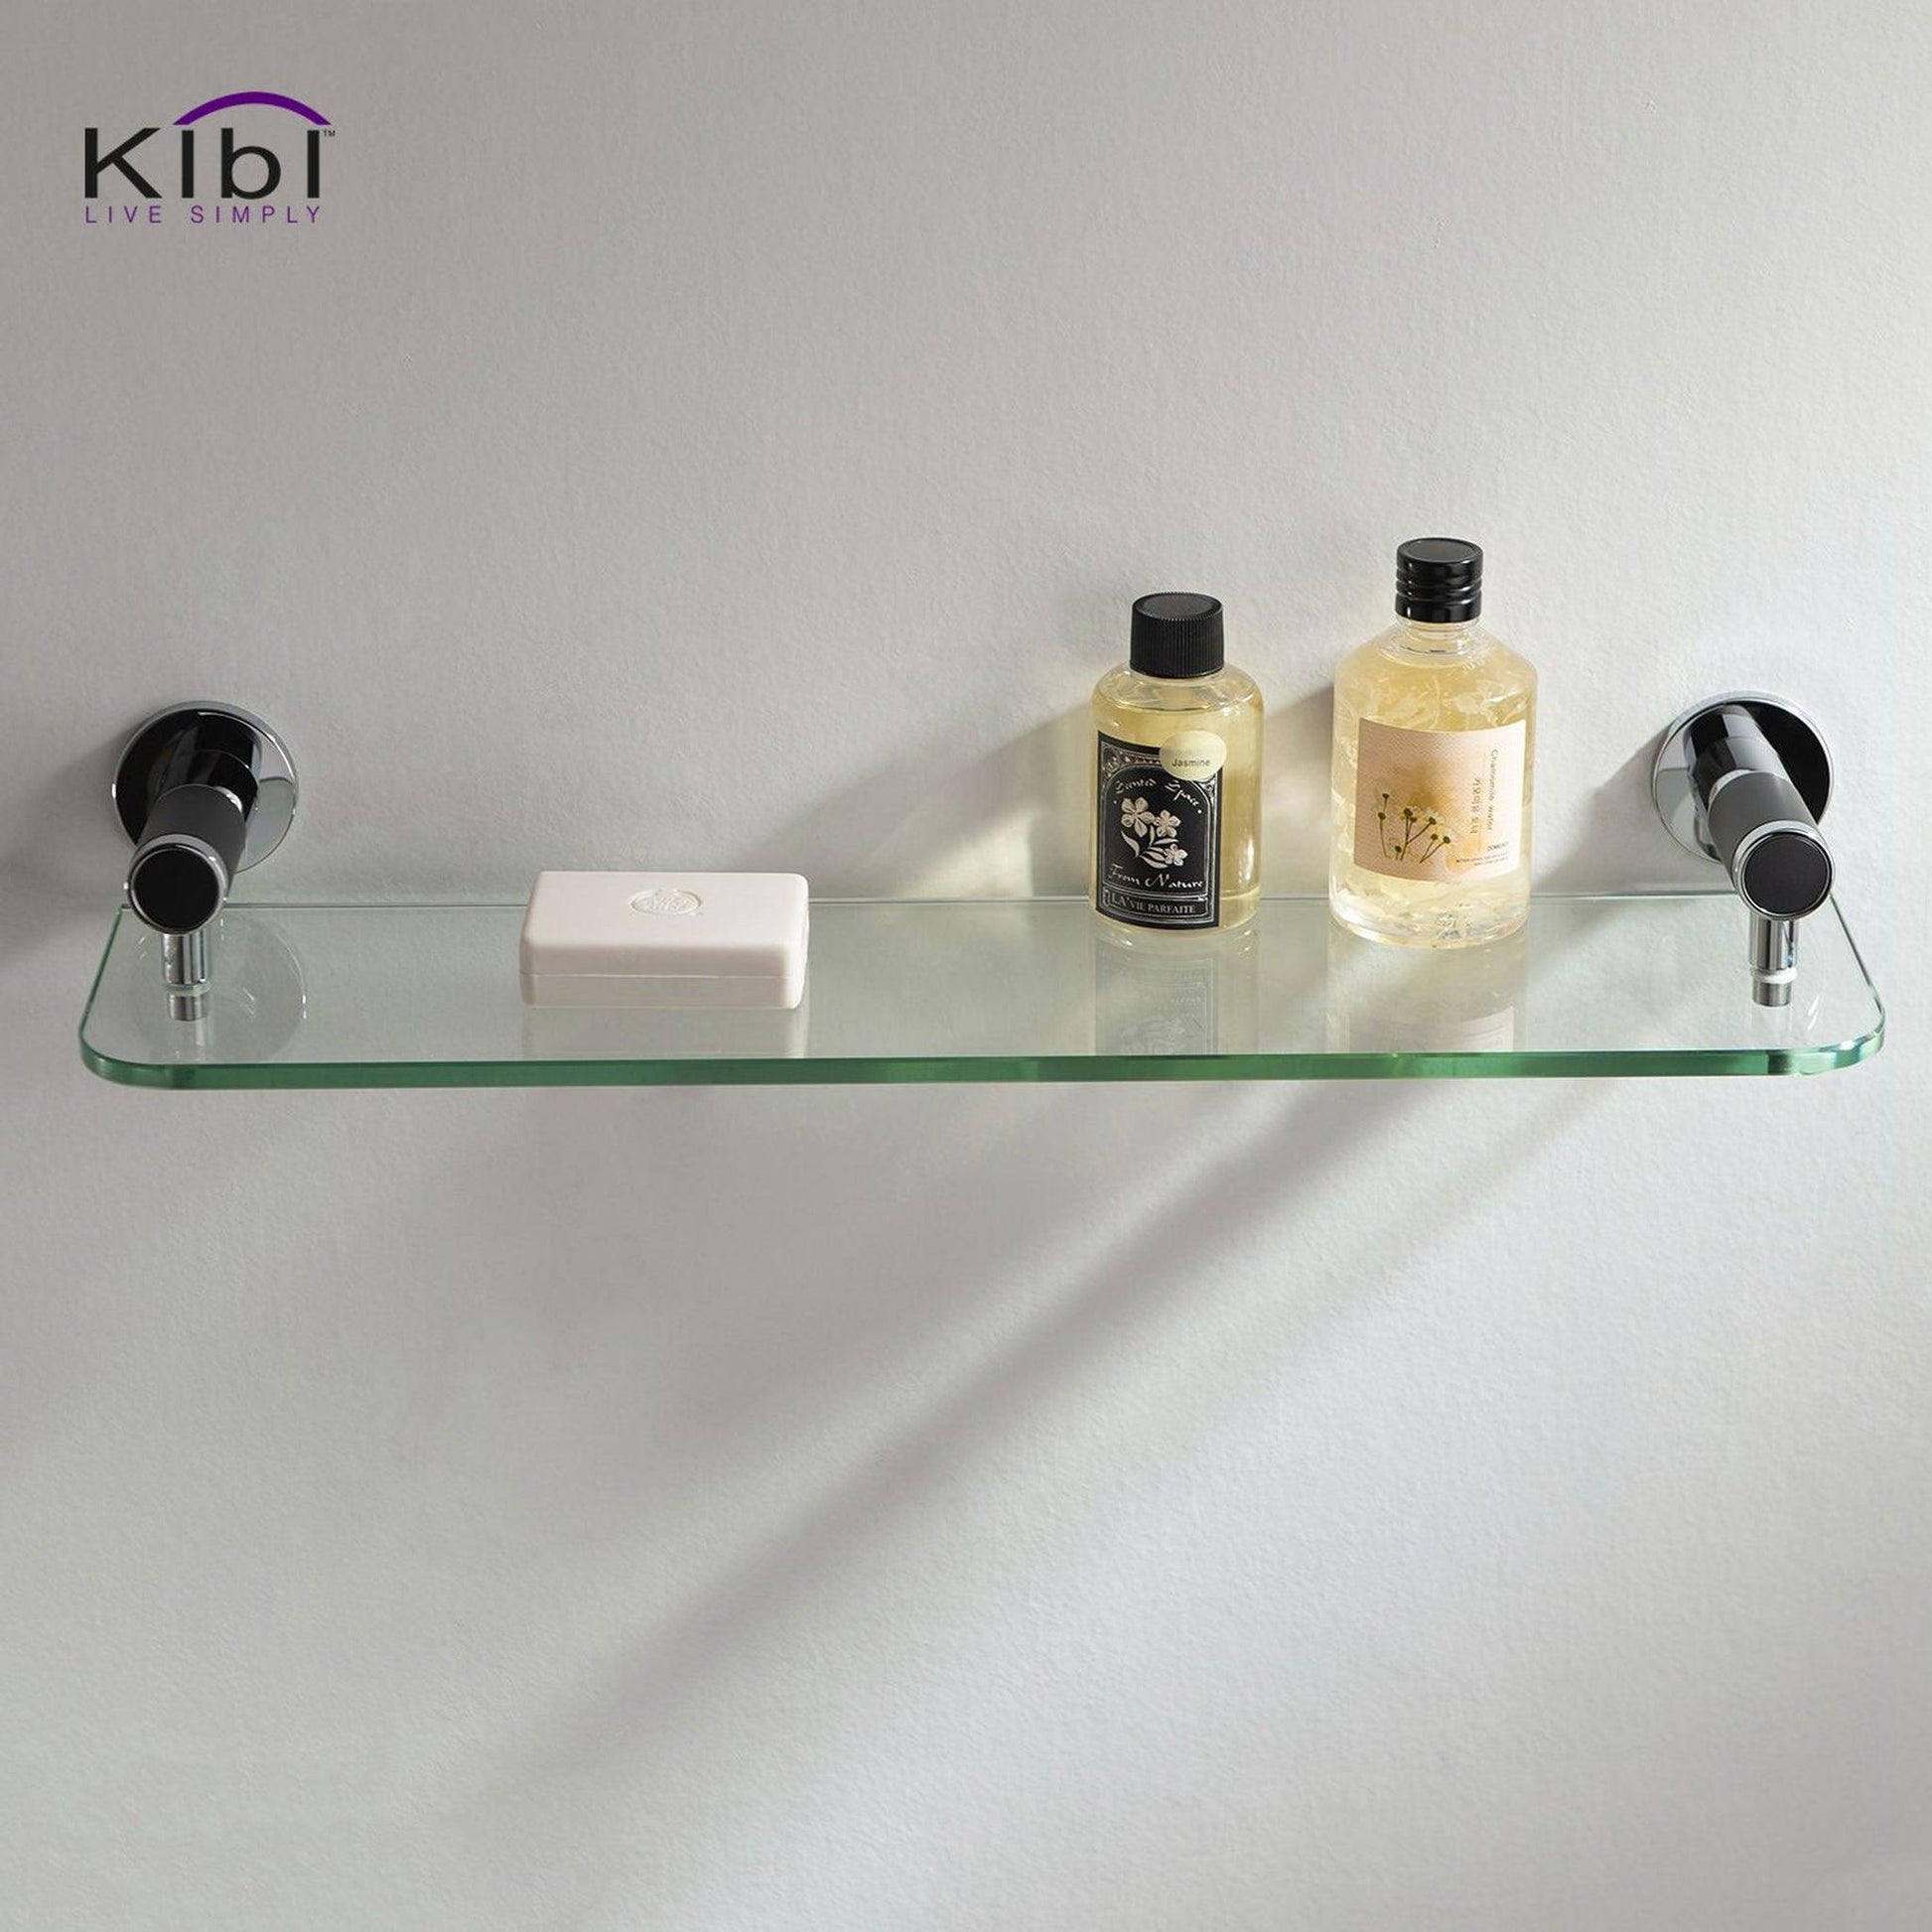 KIBI Abaco Bathroom Shelf in Chrome Black Finish